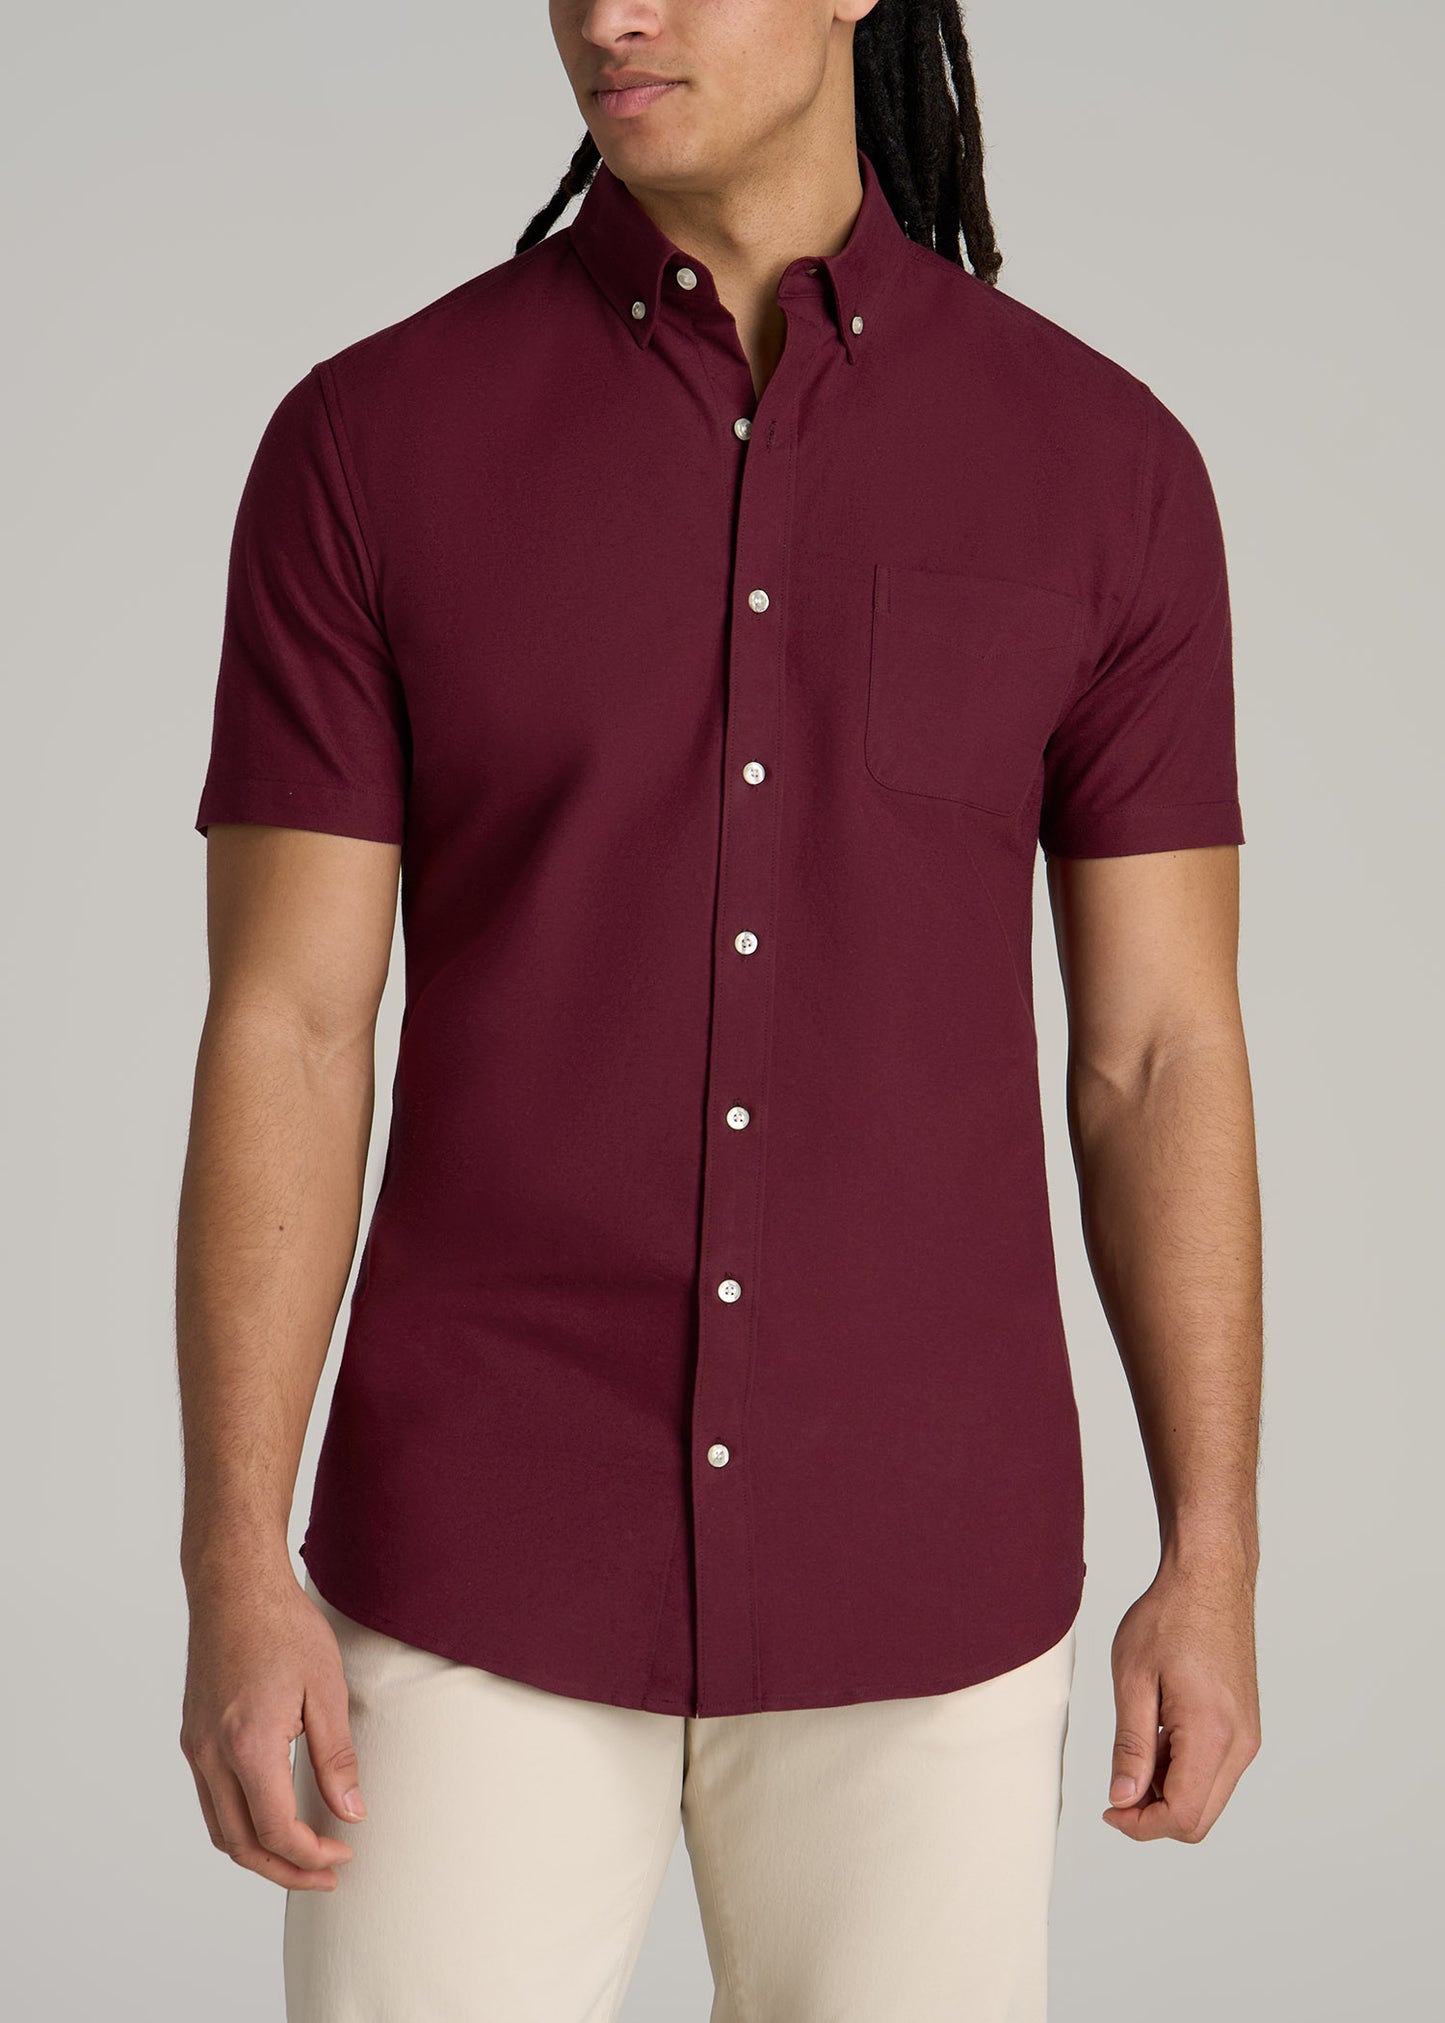 Short Sleeve Oxford Button Shirt For Tall Men in Dark Cherry